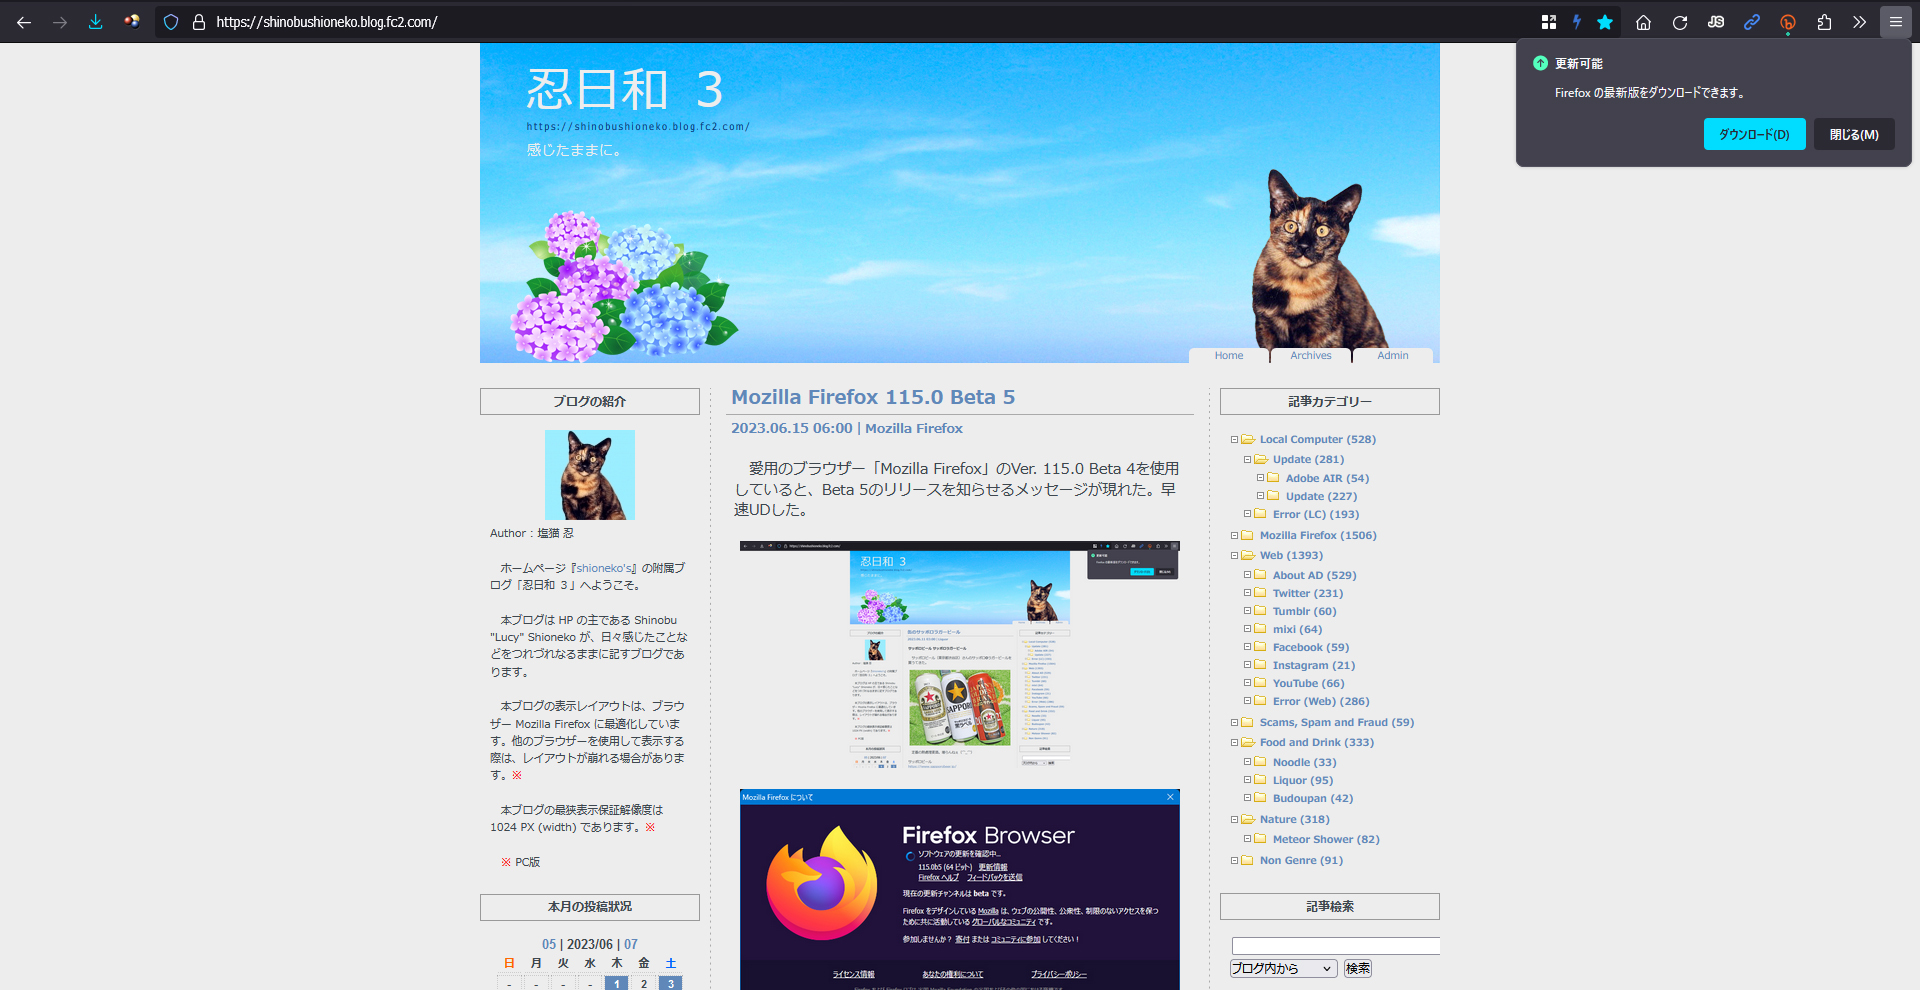 Mozilla Firefox 115.0 Beta 6